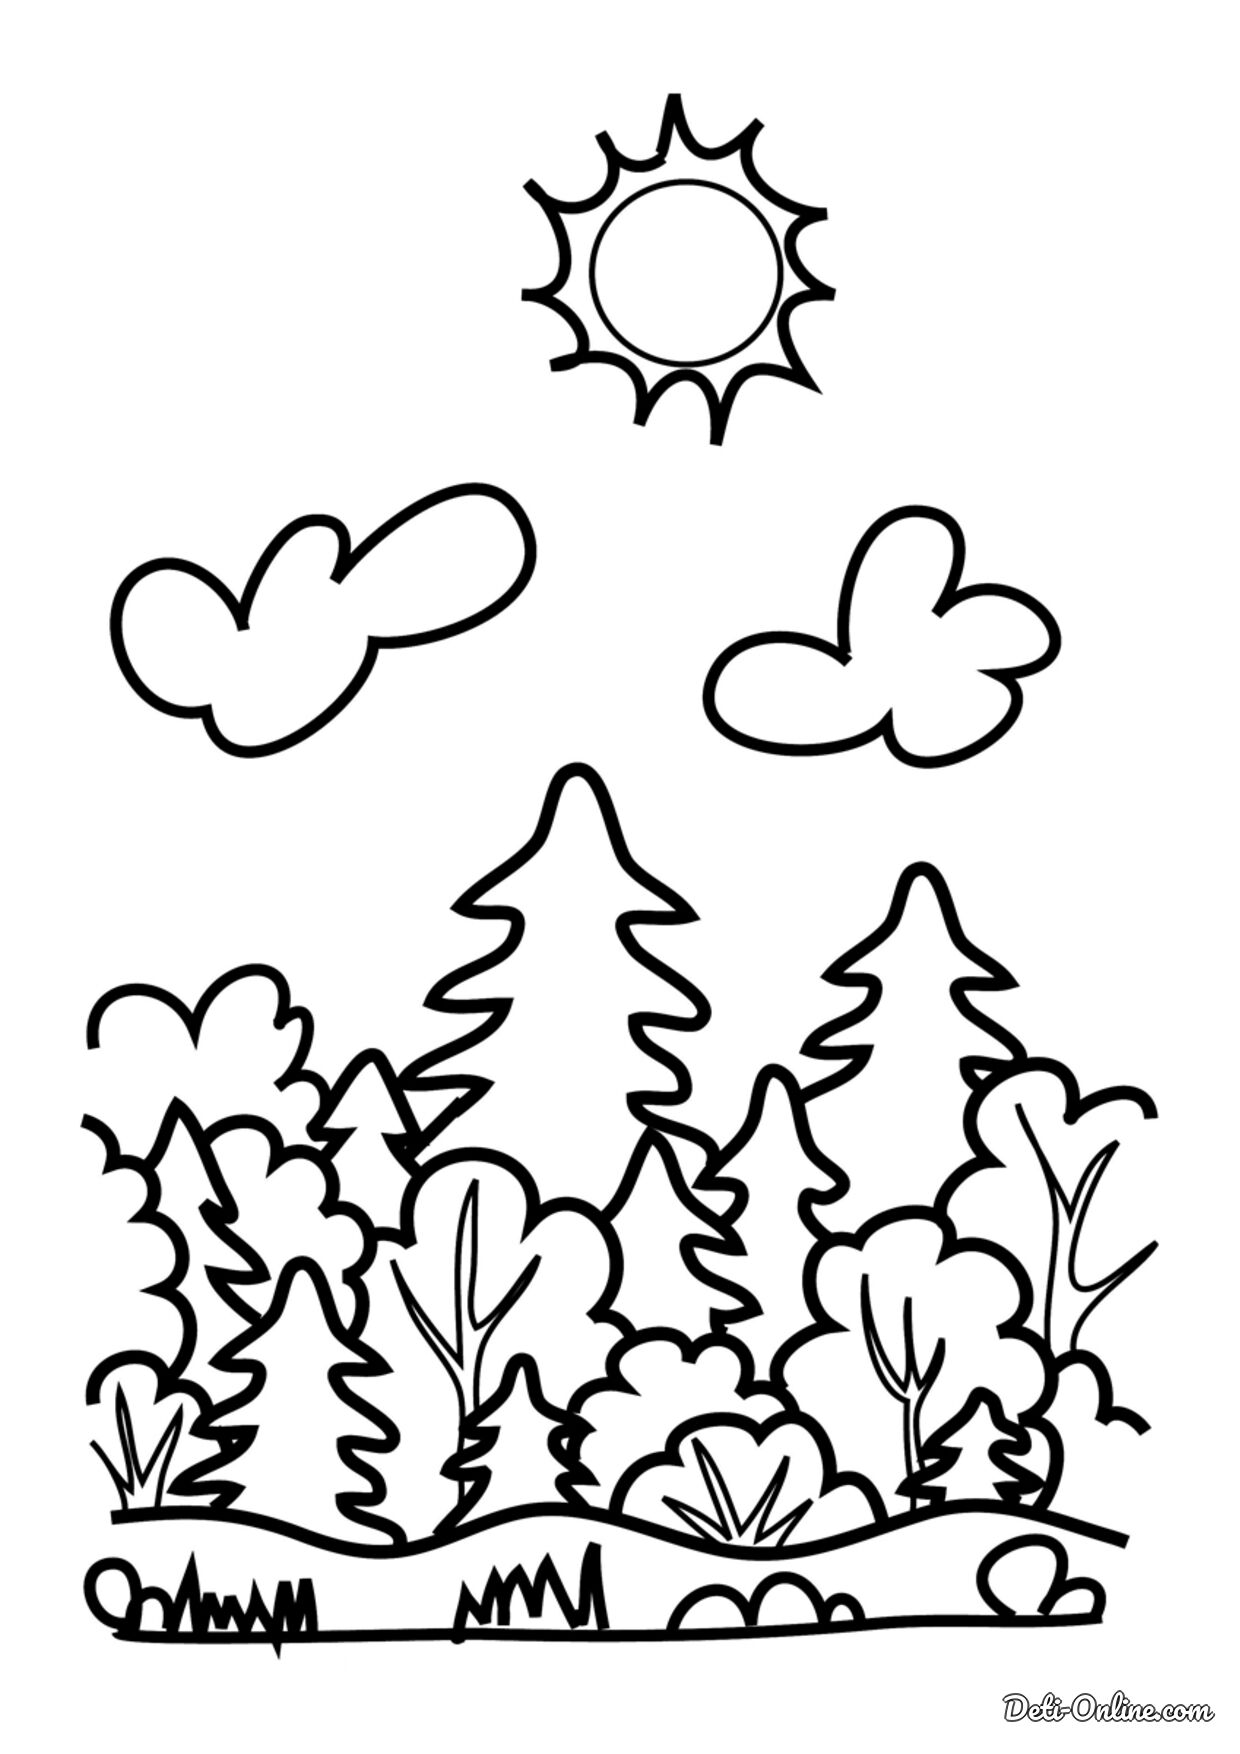 Раскраска для малышей «Лесные зверята», формат А4, 16 стр.